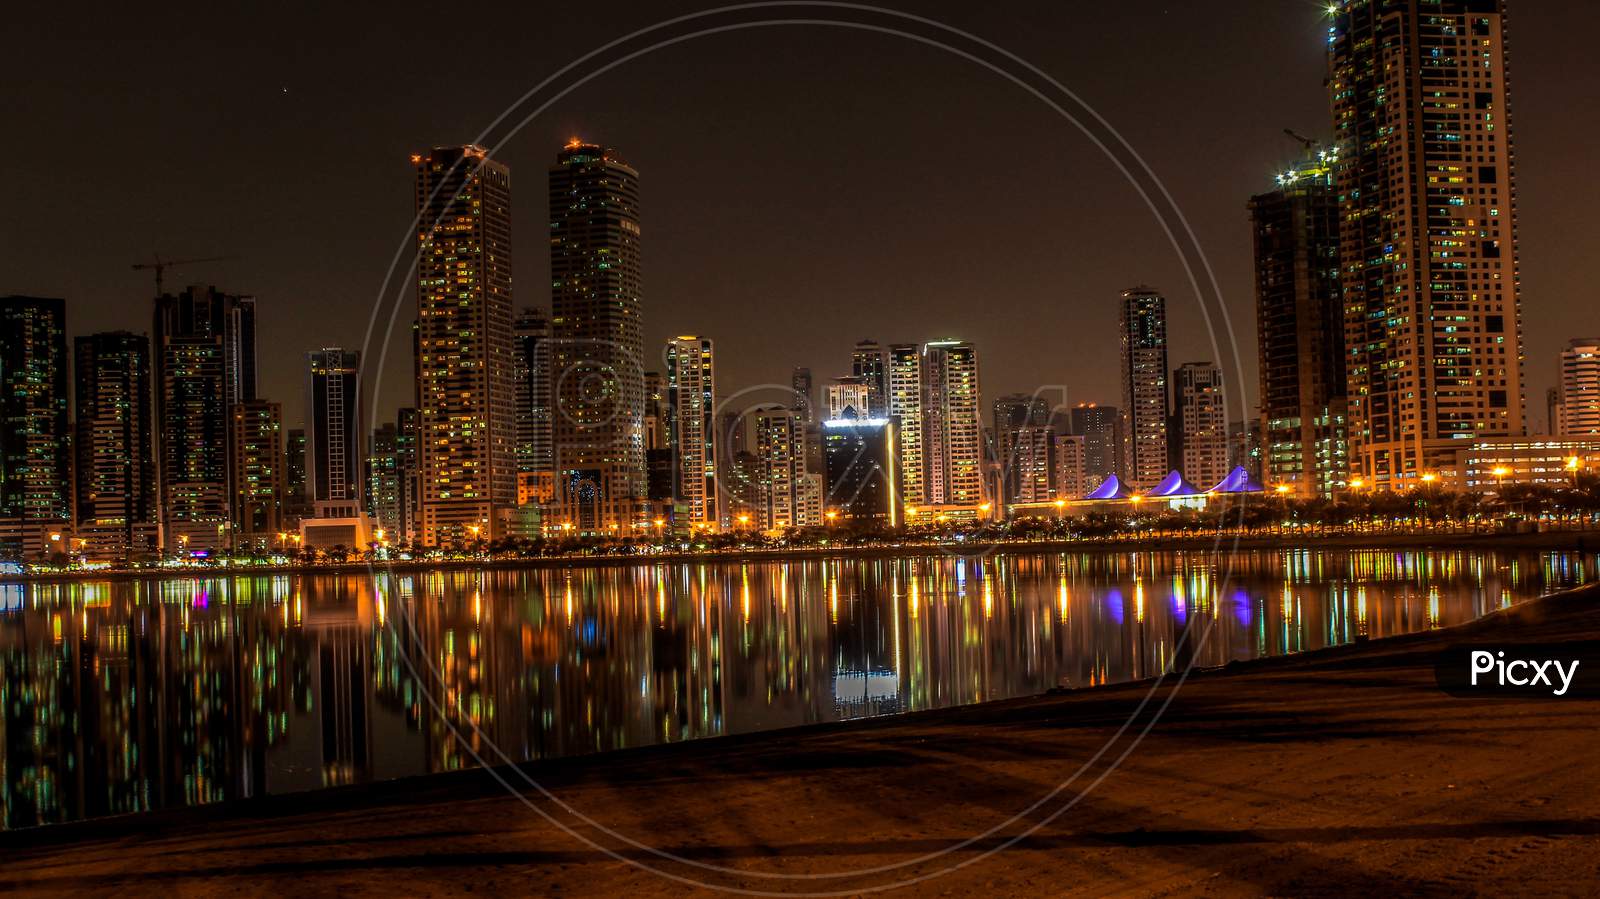 A Reflection Shot Of A Cityscape At Al Majaz Beach Corniche, Sharjah, Uae.